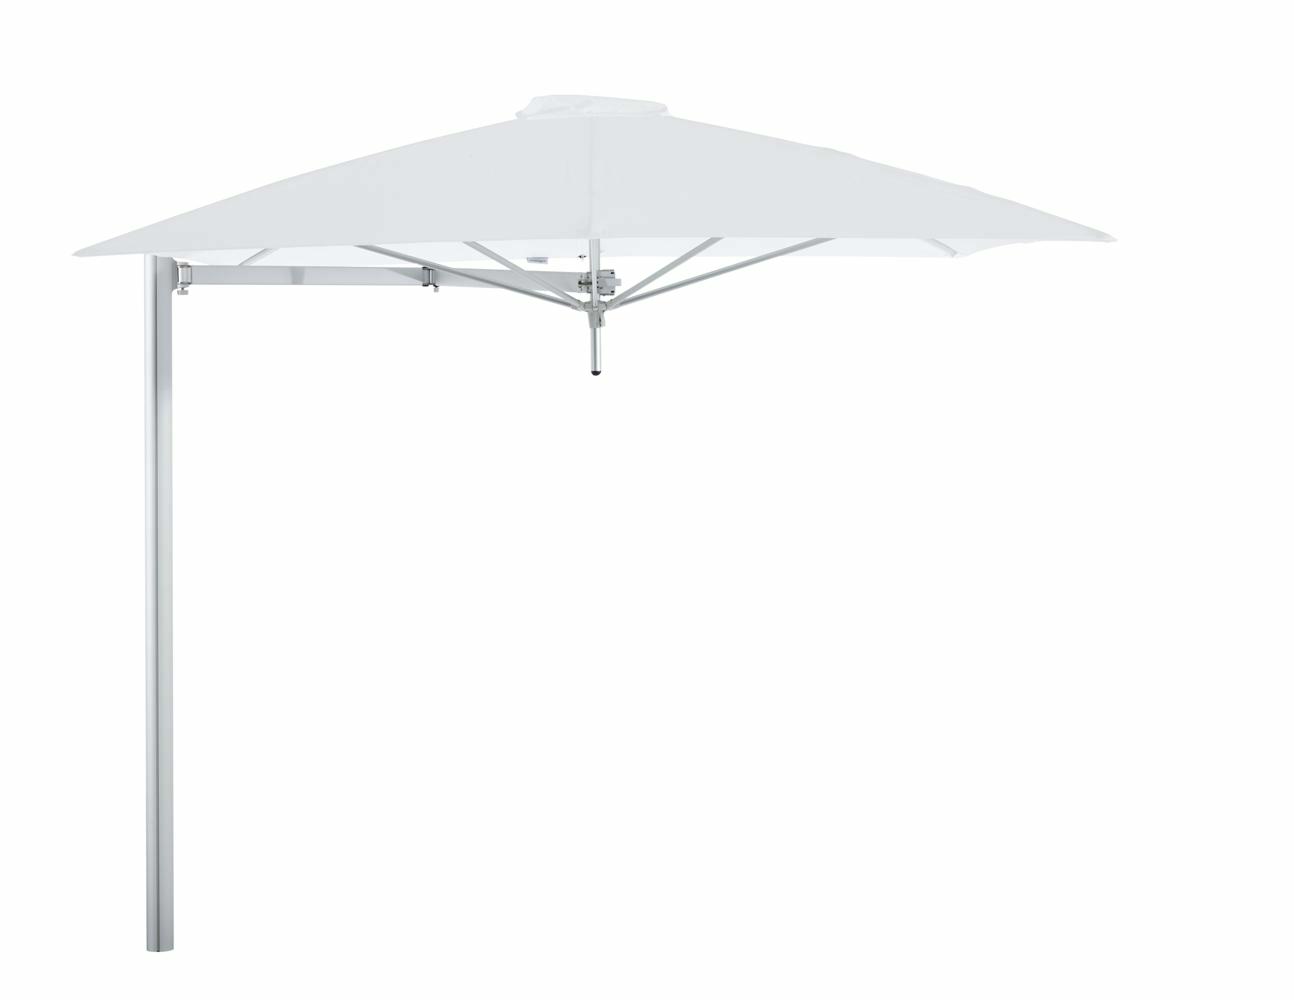 Paraflex cantilever umbrella square 2,3 m with Natural fabric and a Neo arm